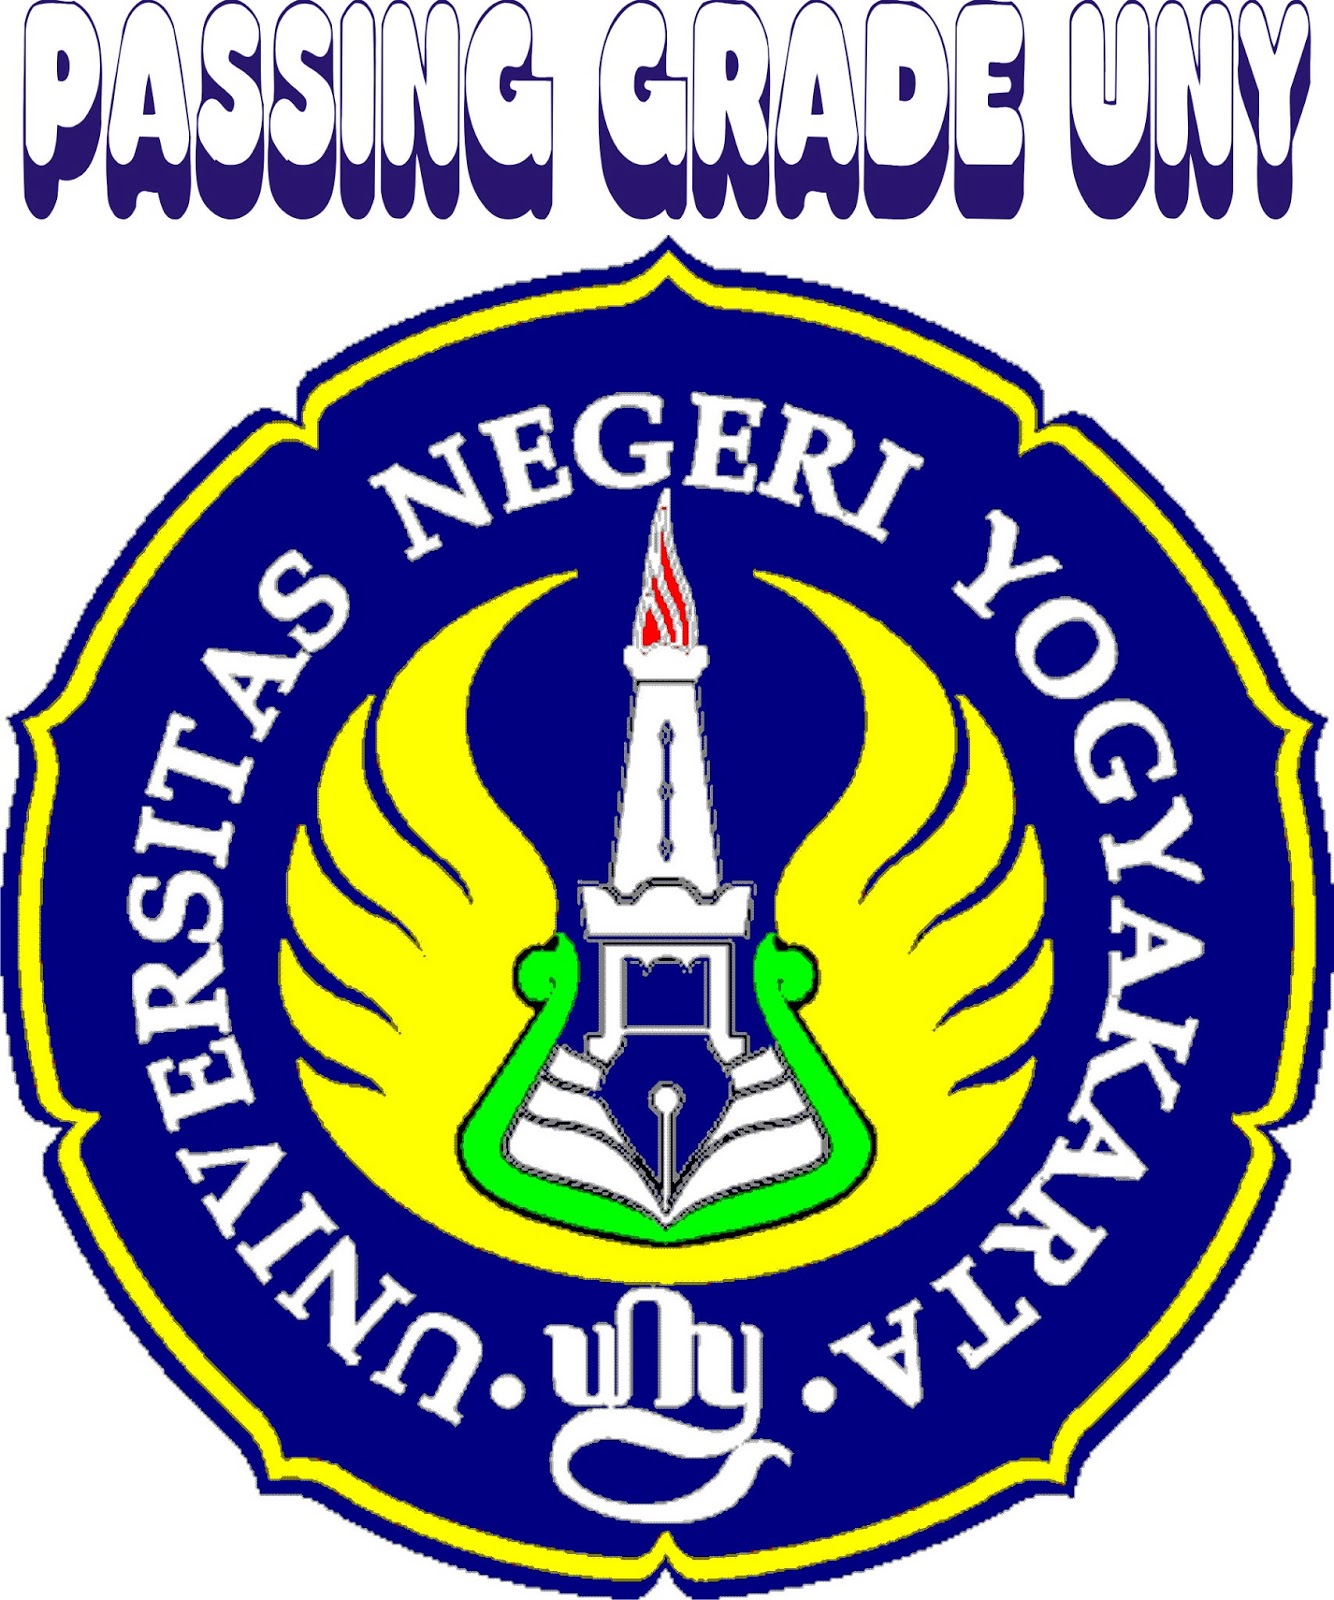 Passing Grade Universitas Negeri Yogyakarta UNY 2013